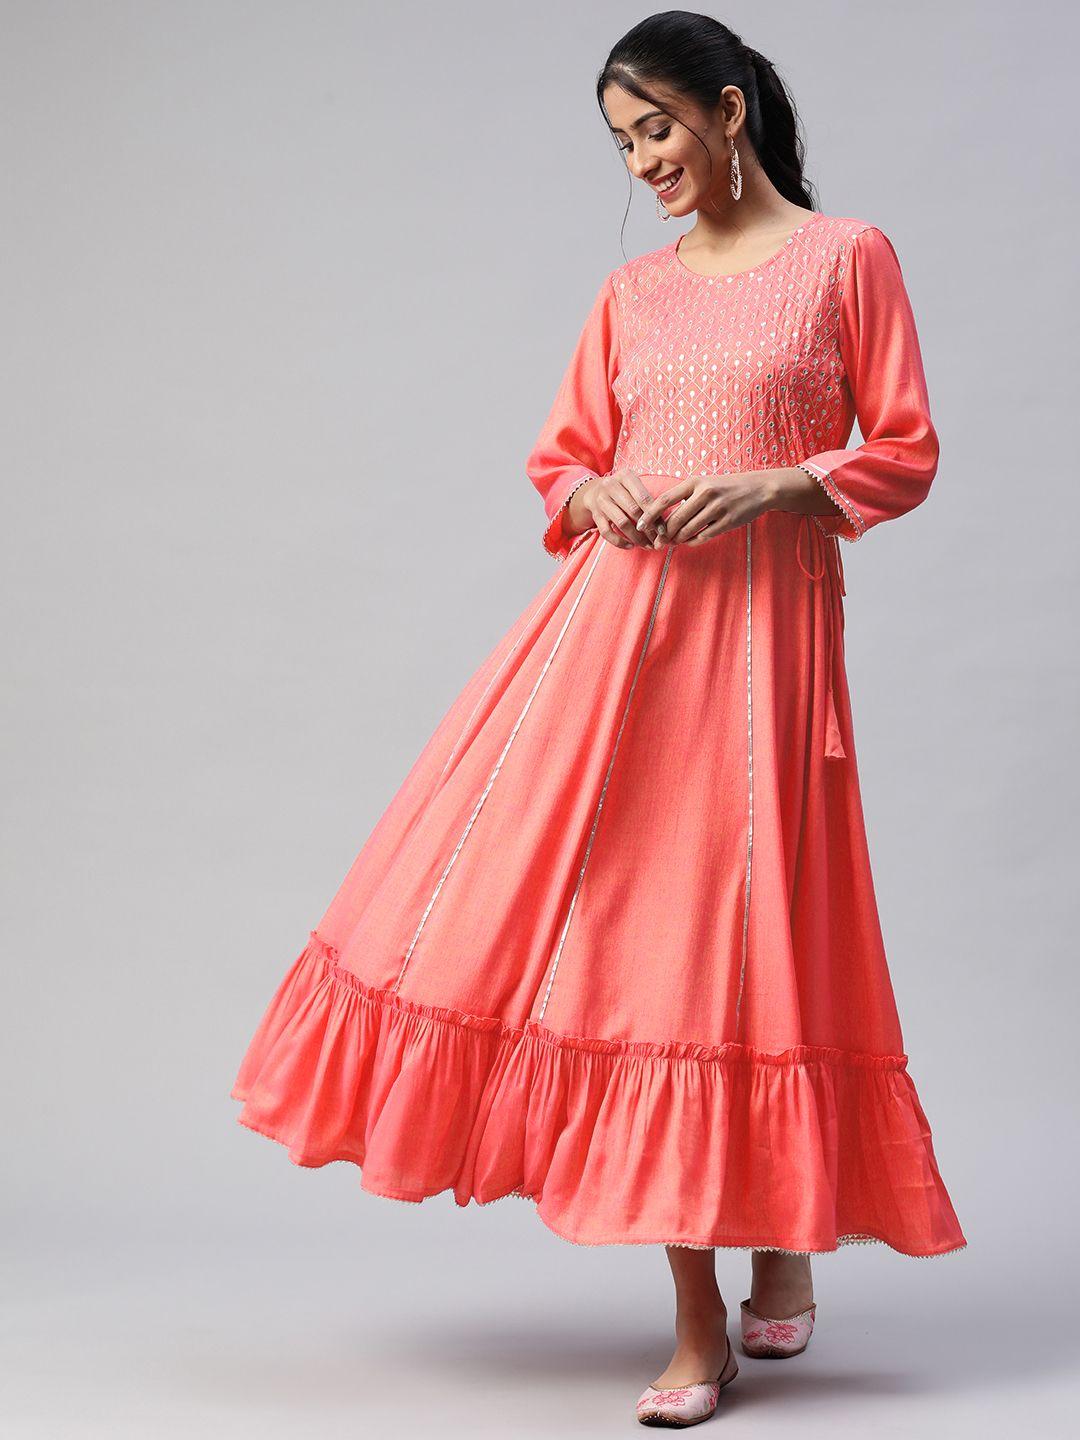 readiprint-fashions-pink-embellished-ethnic-maxi-dress